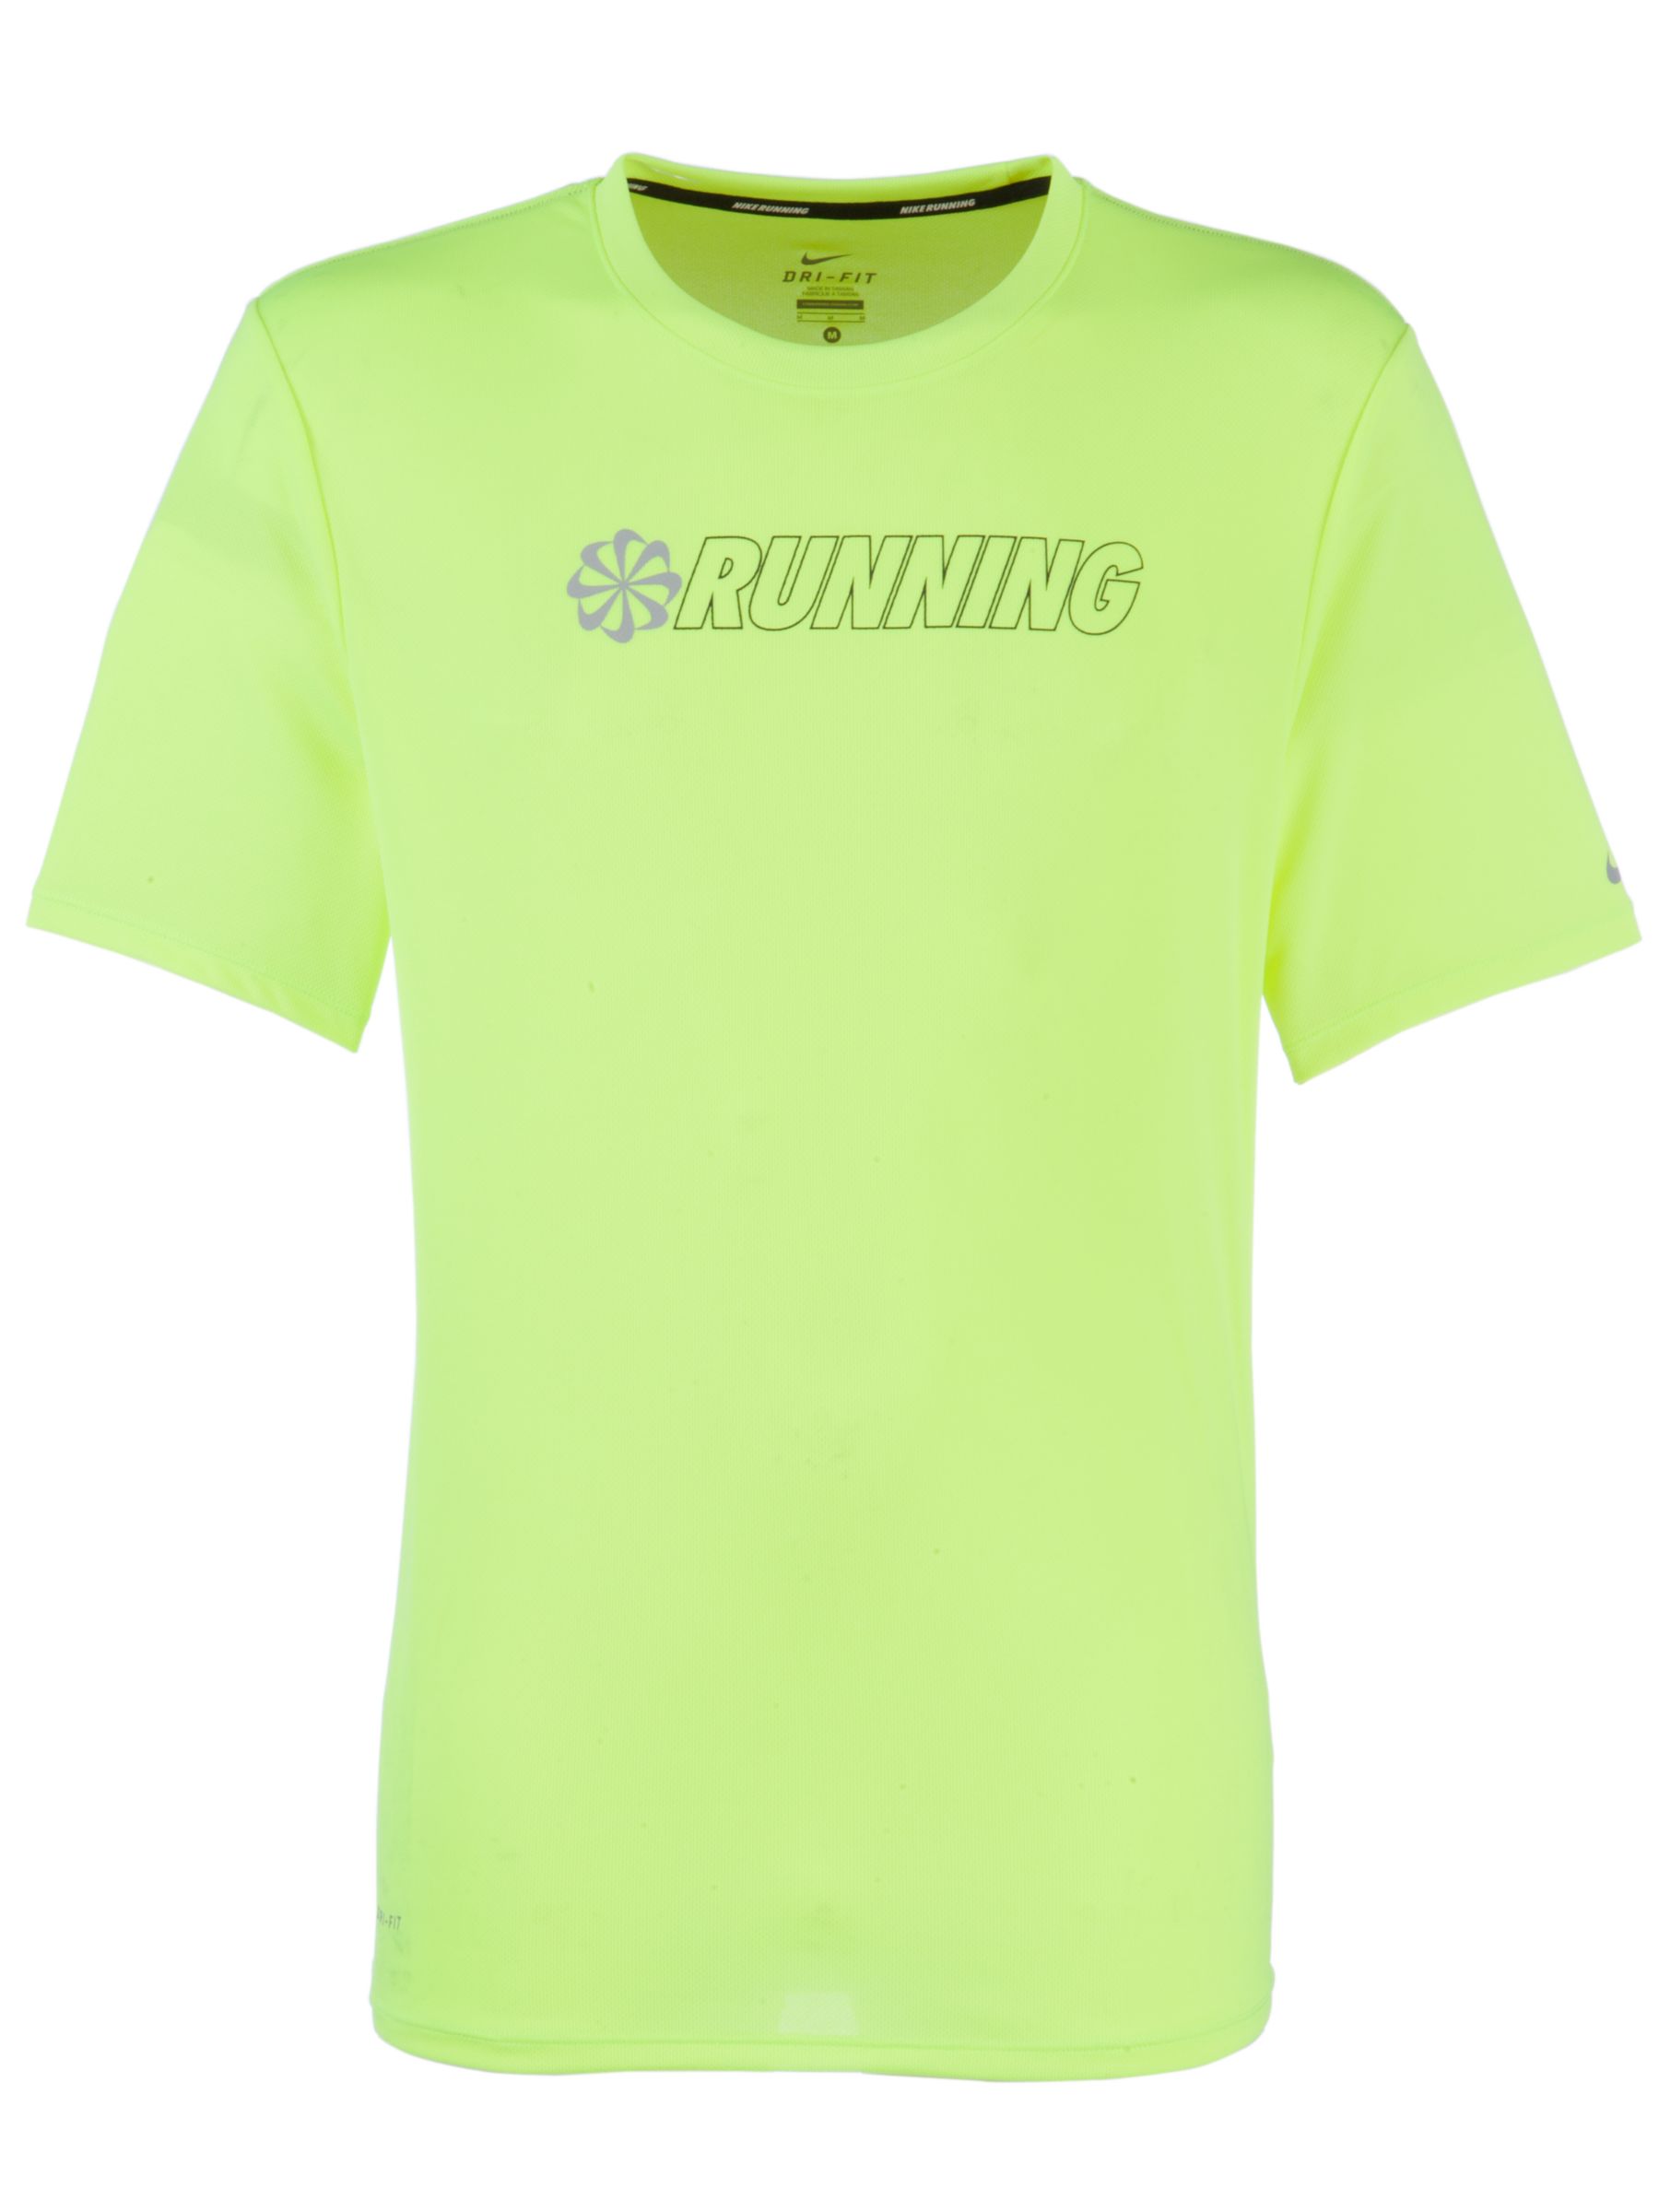 Nike Challenger Corporate Short Sleeve T-Shirt,